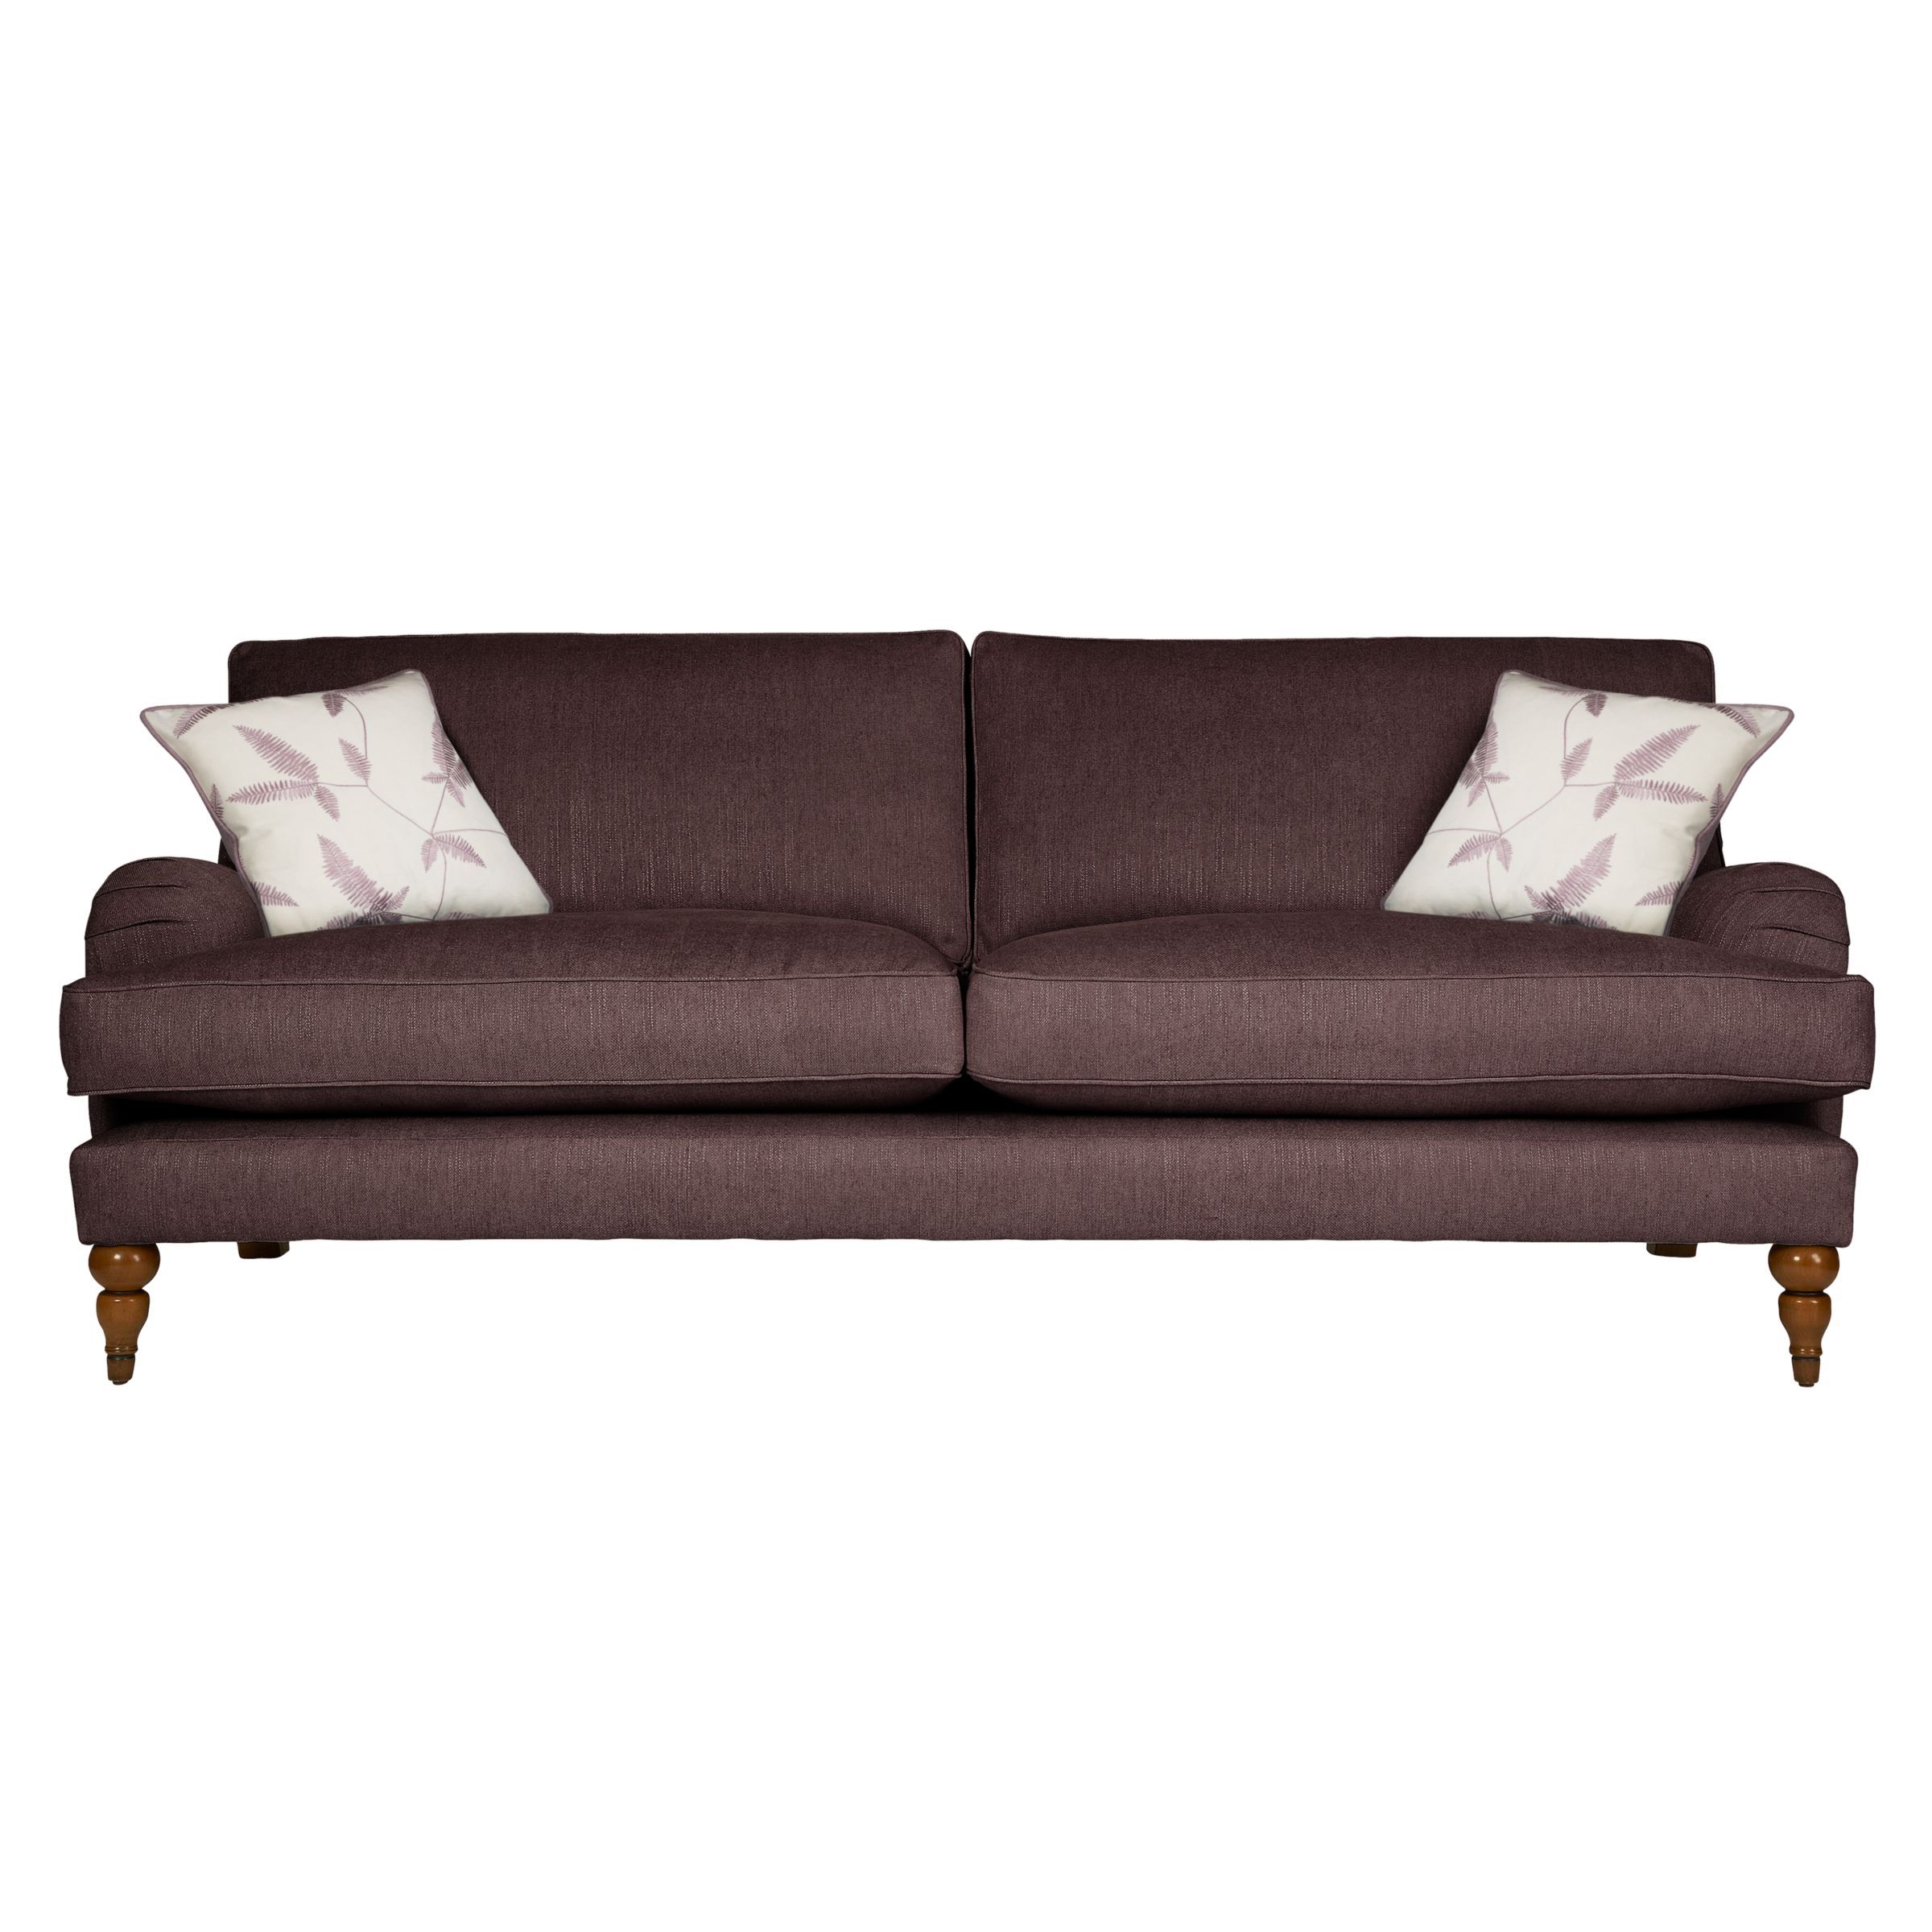 John Lewis Penryn Grand Sofa, Mauve / Elna, width 228cm